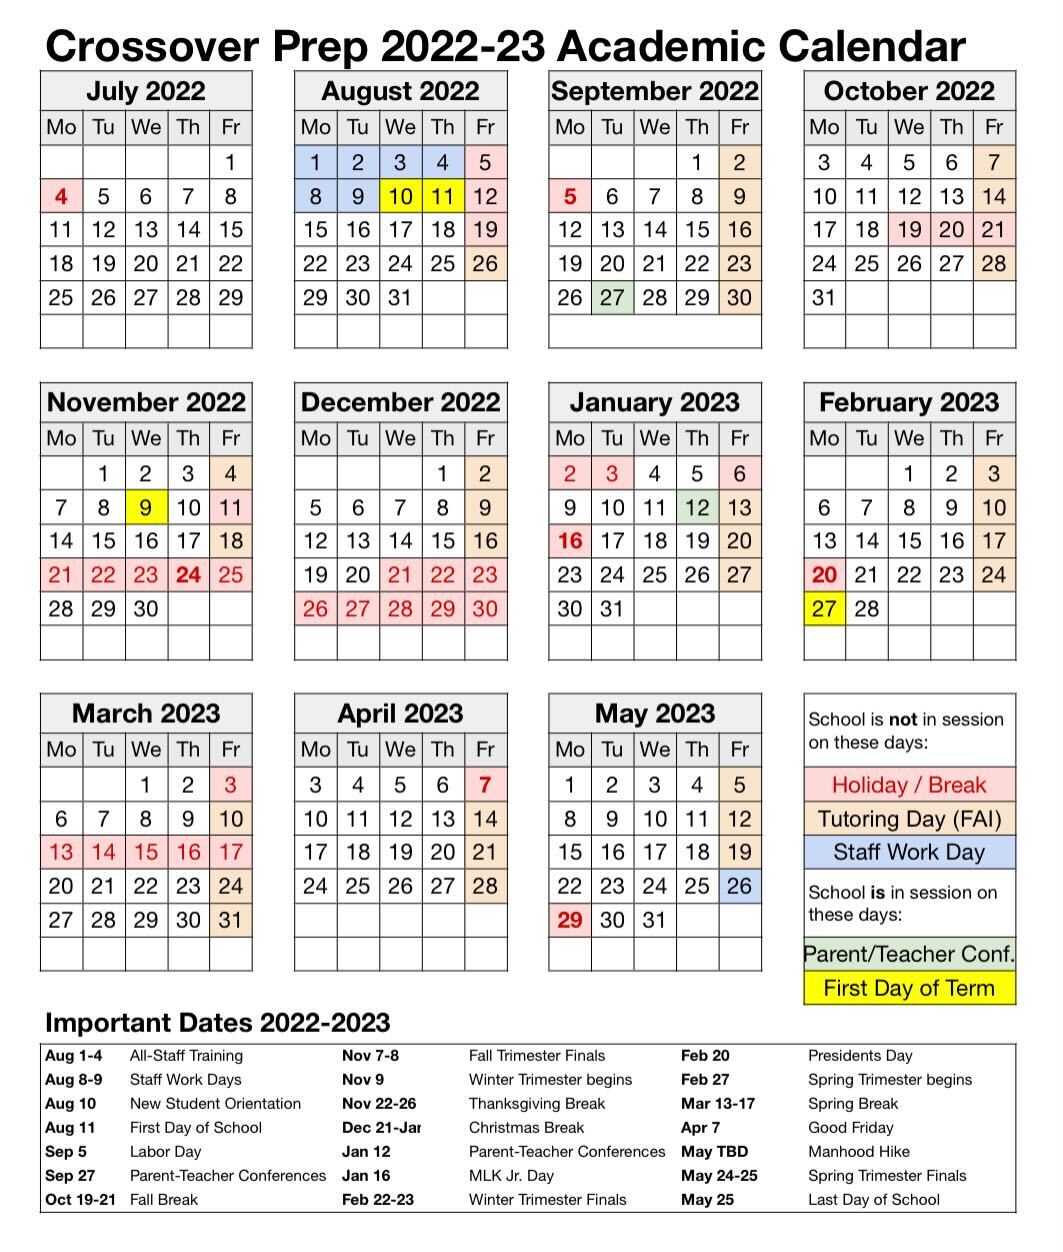 SY22-23 CPA Calendar (7.26.22)